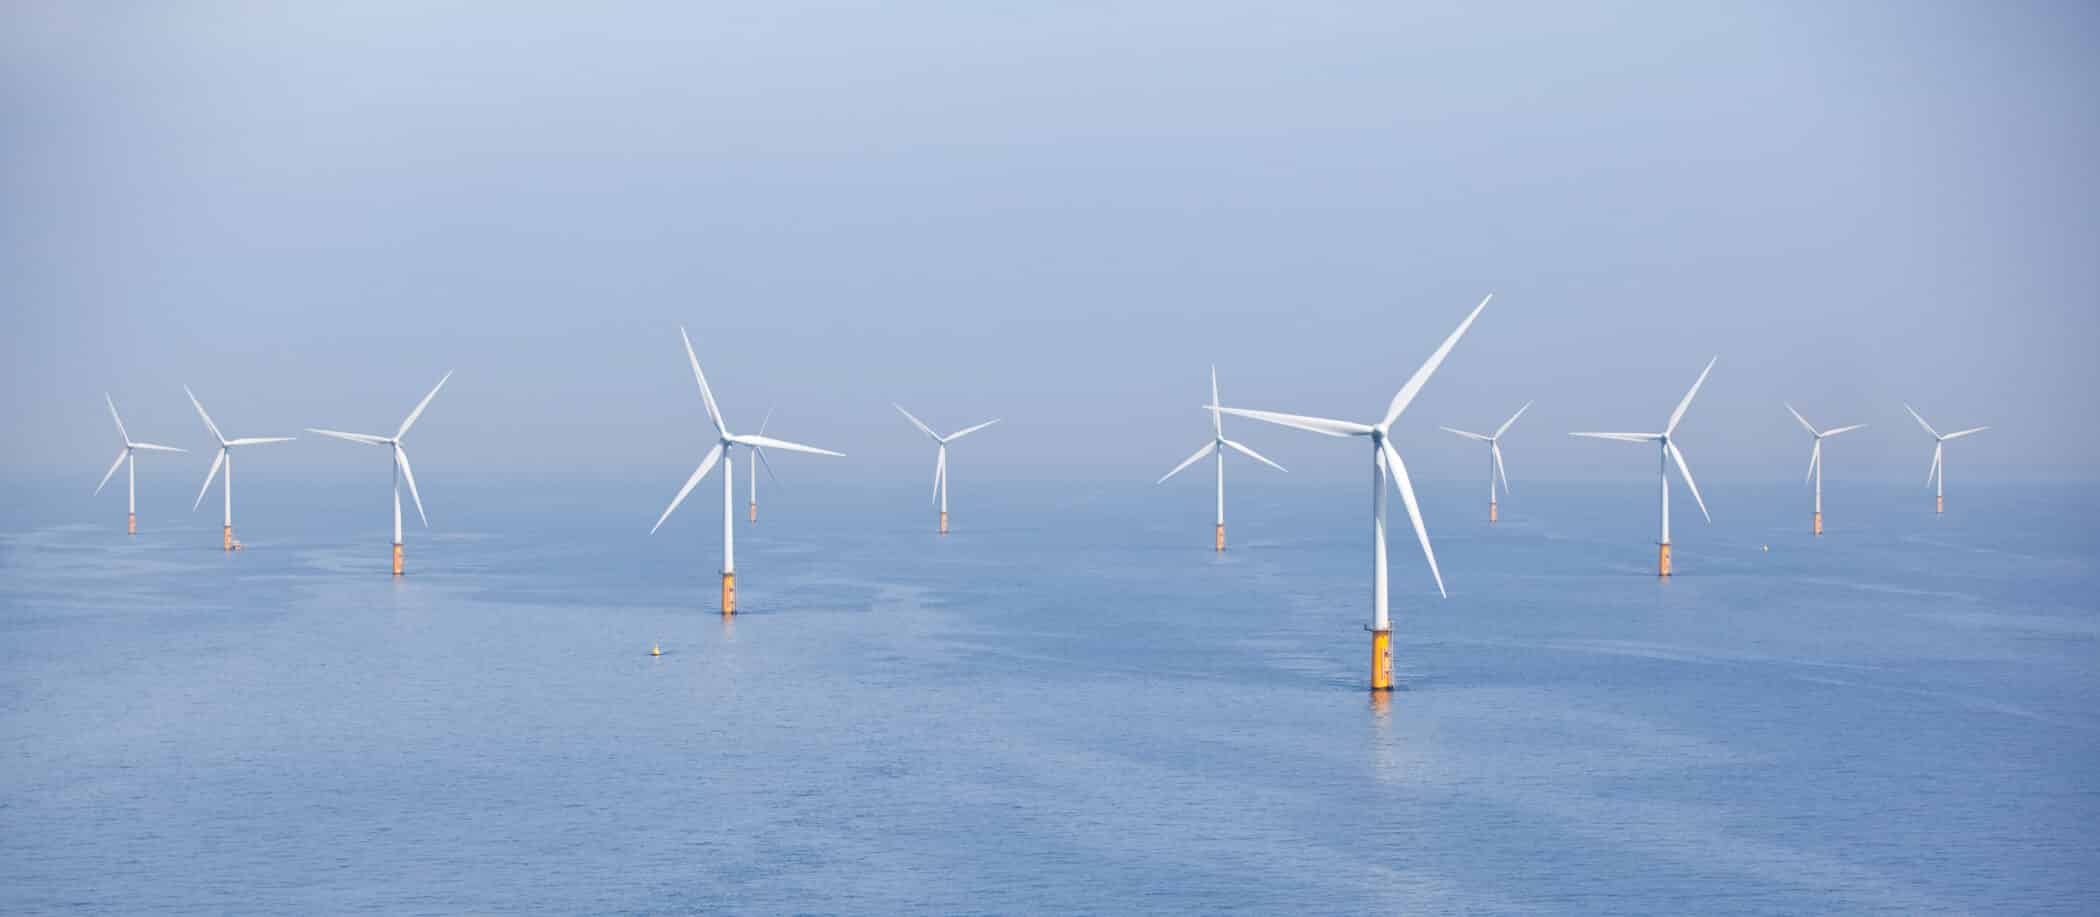 Offshore wind farm - Non-price criteria for Offshore Wind Auctions